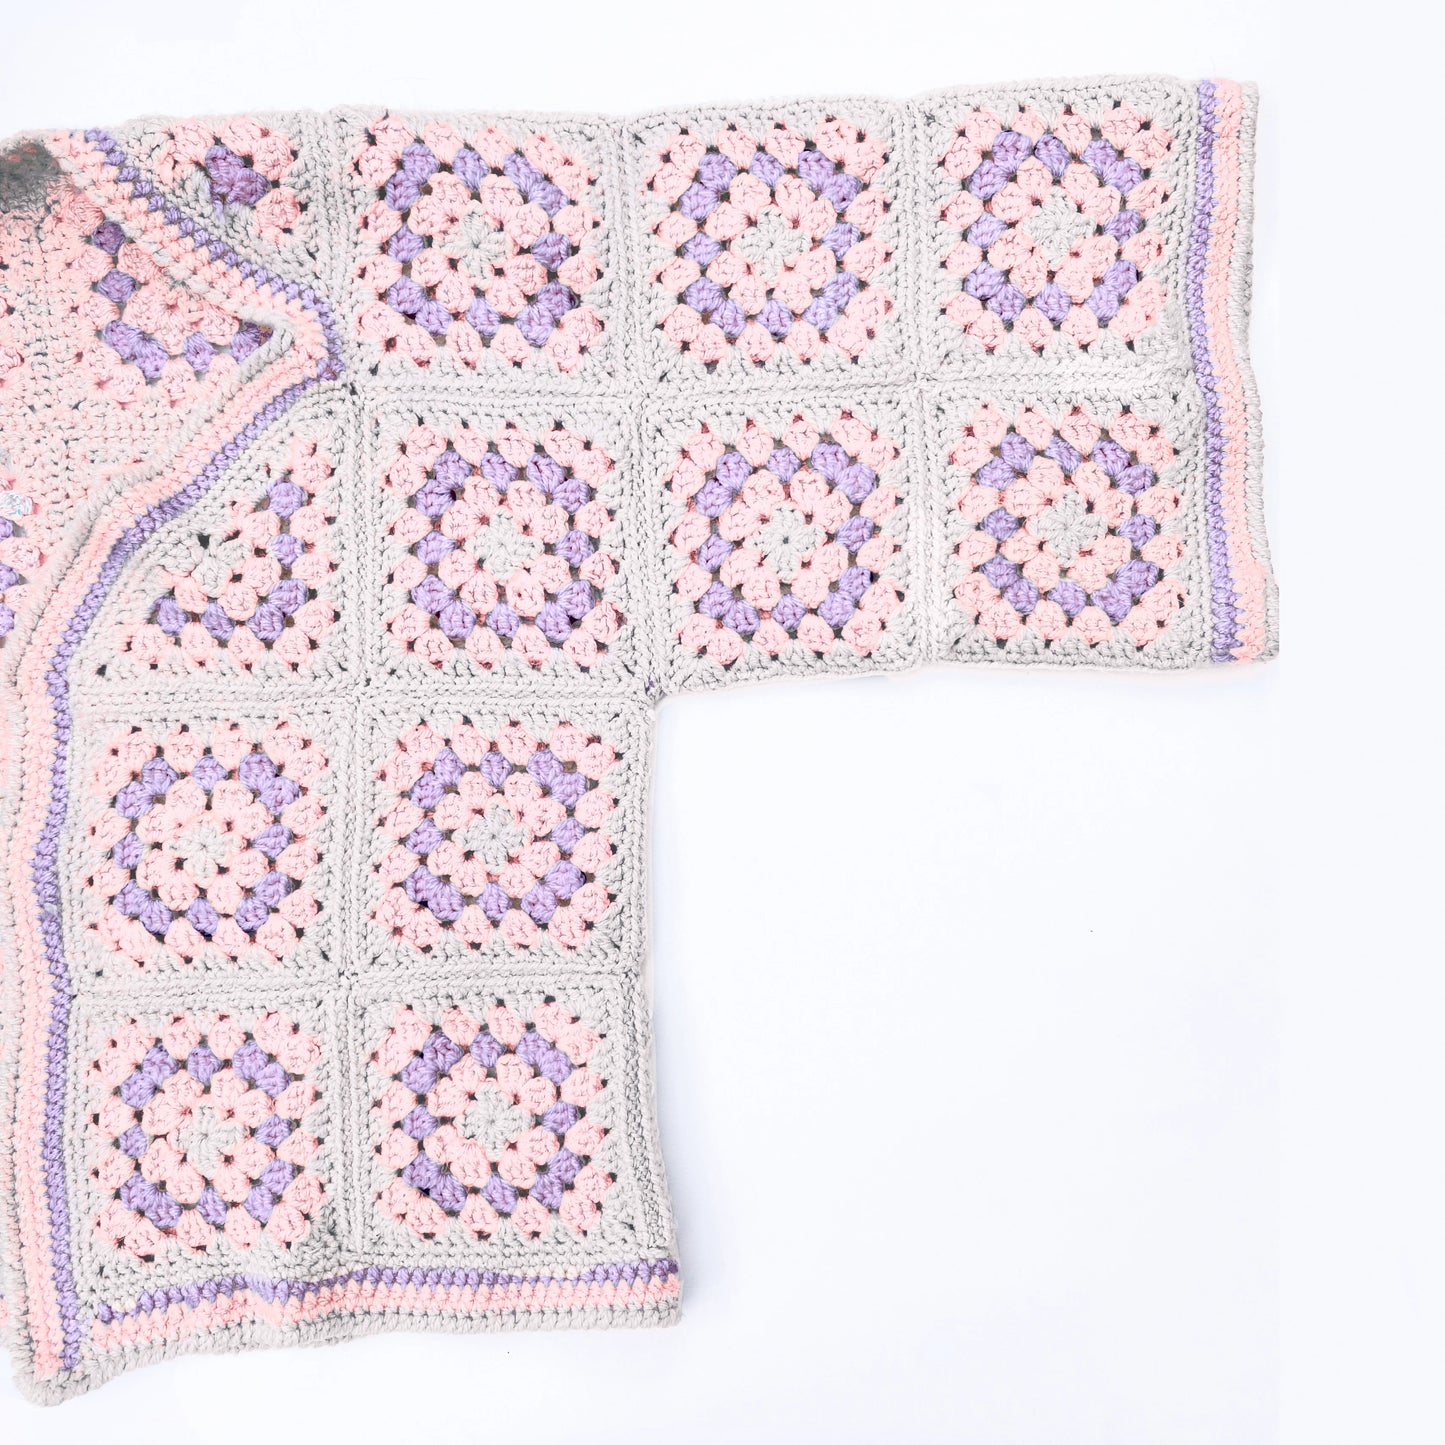 Granny Squares for Beginners Crochet Workshop, Marlborough, 11th March